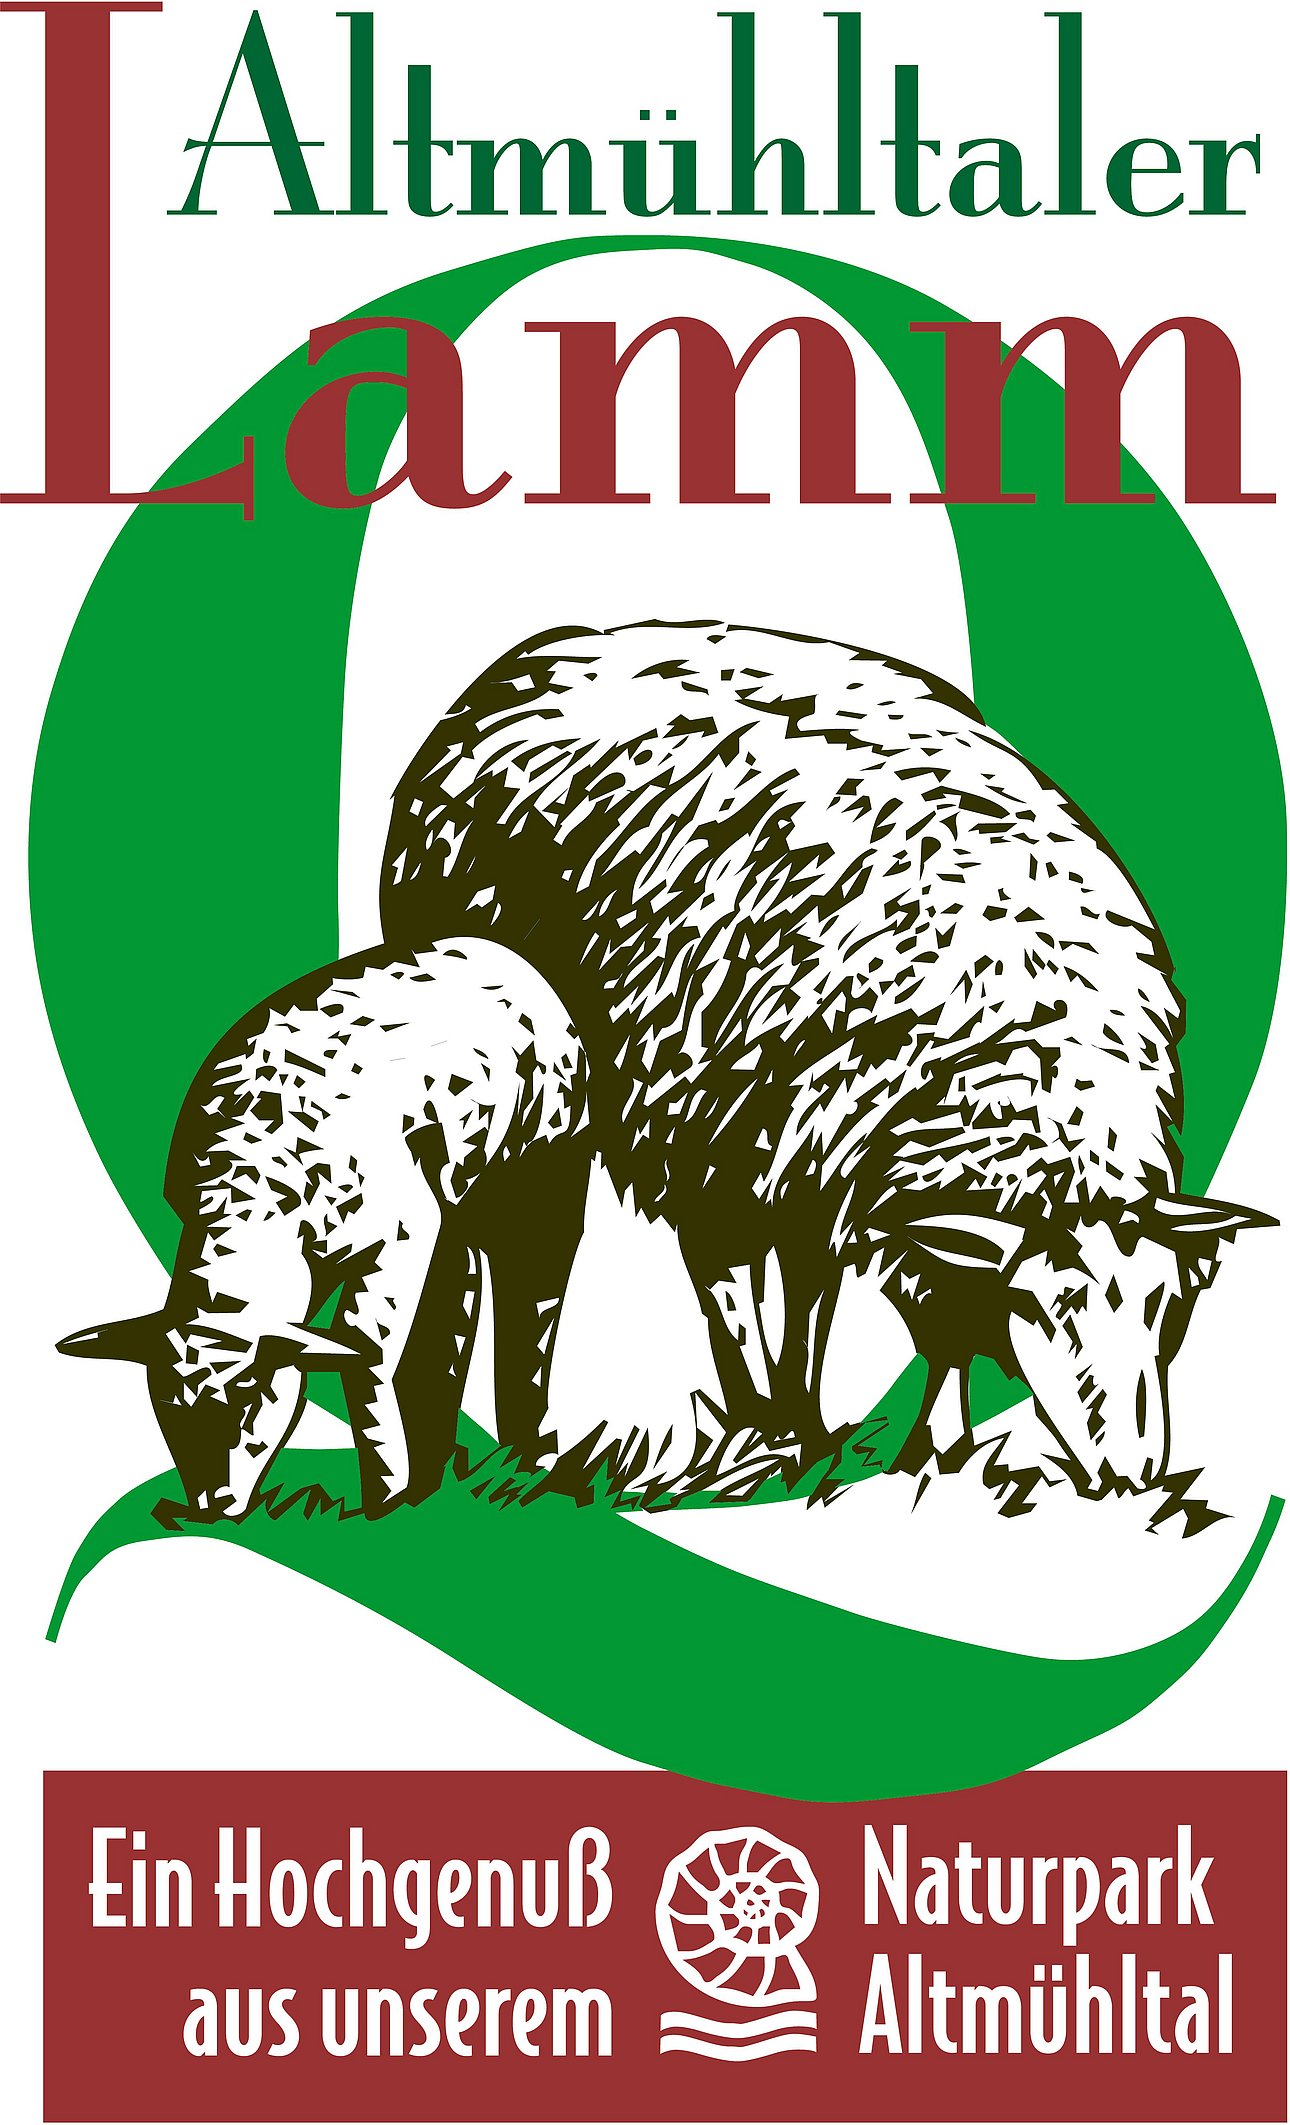 Logo der Marke "Altmühltaler Lamm"